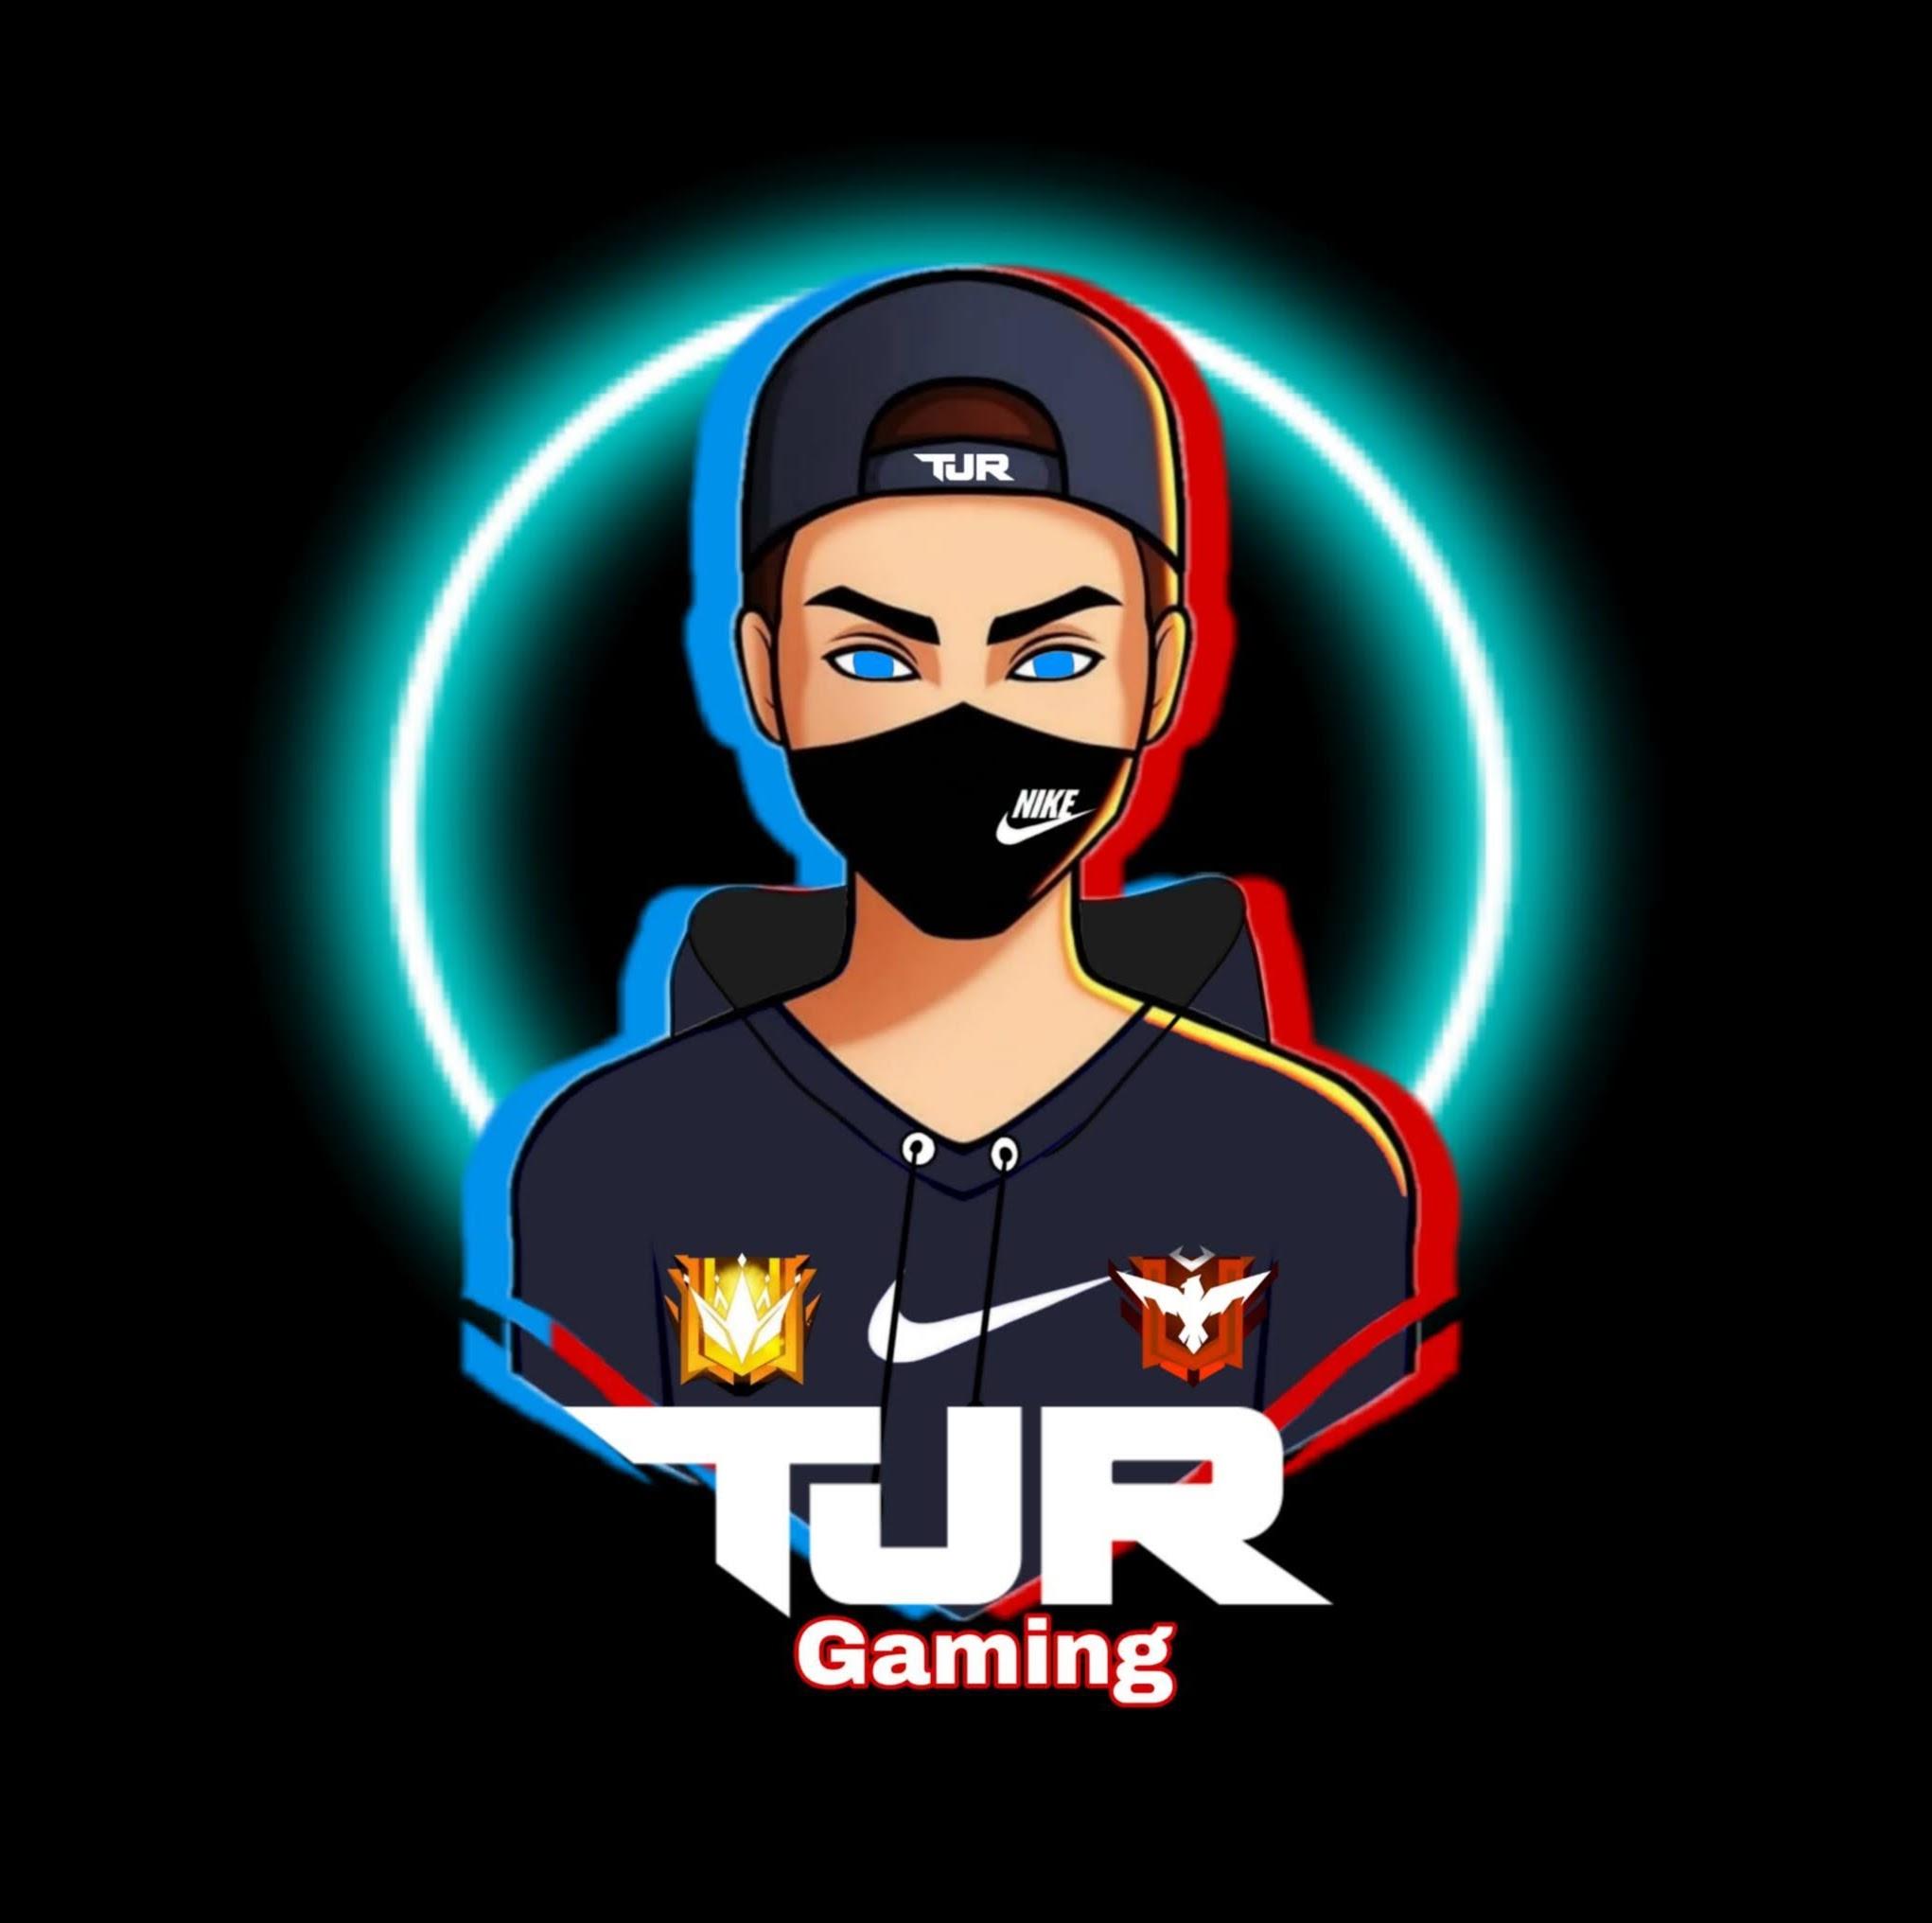 TJR Gaming